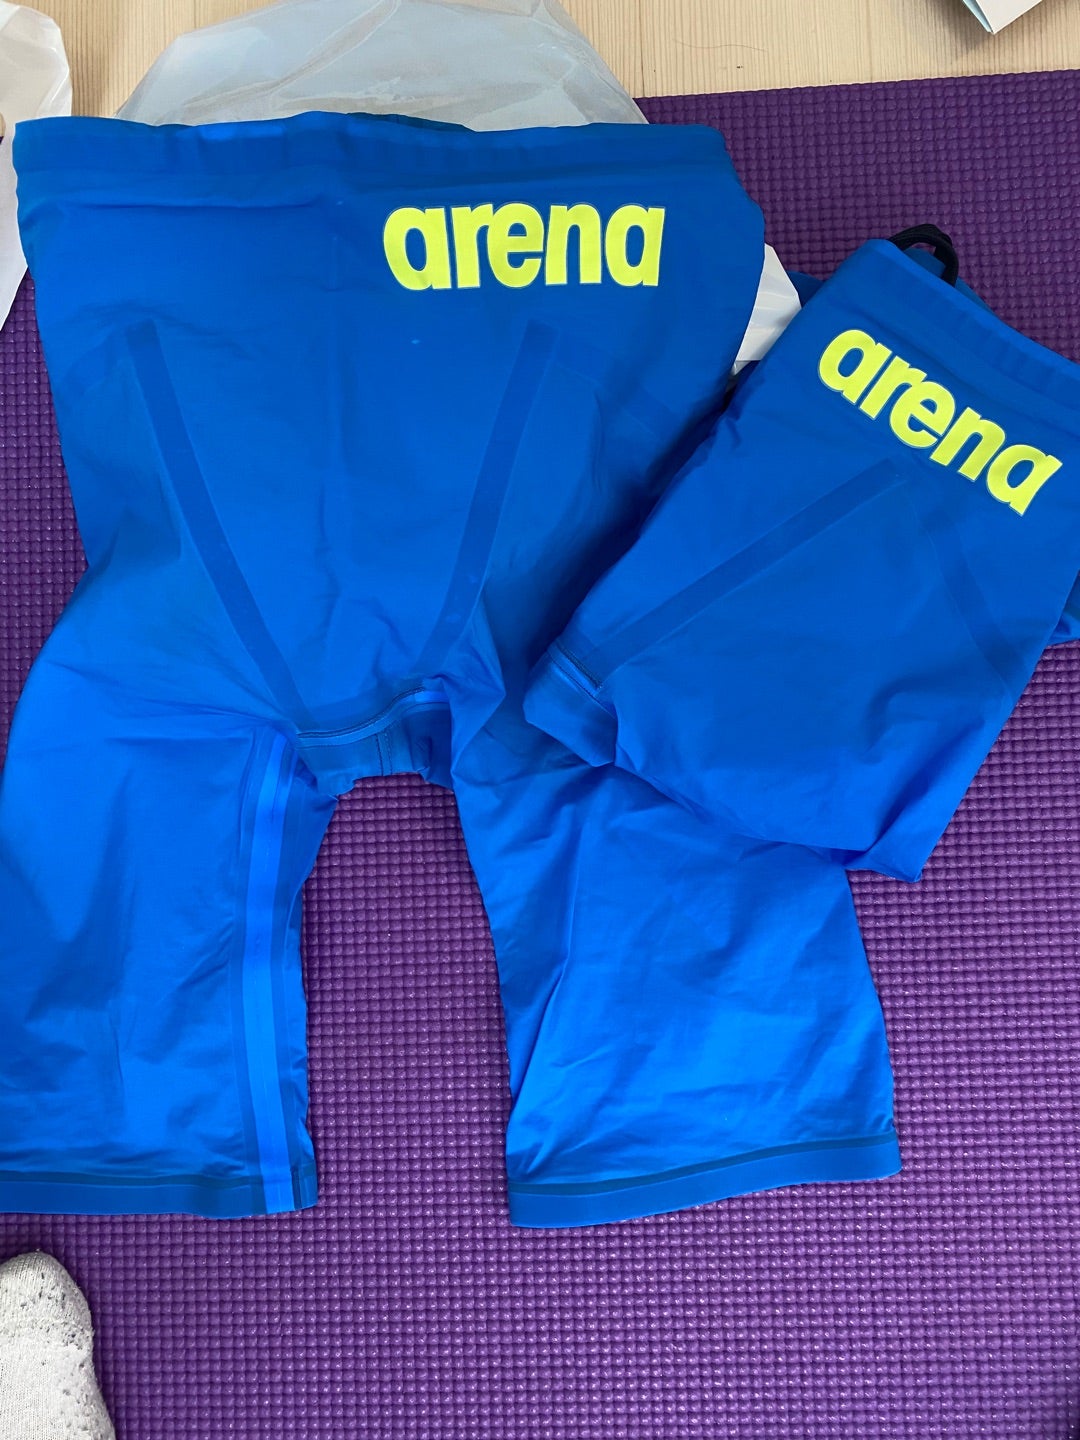 arenaアルティメットアクアフォース MF スポーツ用 水着 メンズ 送料無料当店人気商品